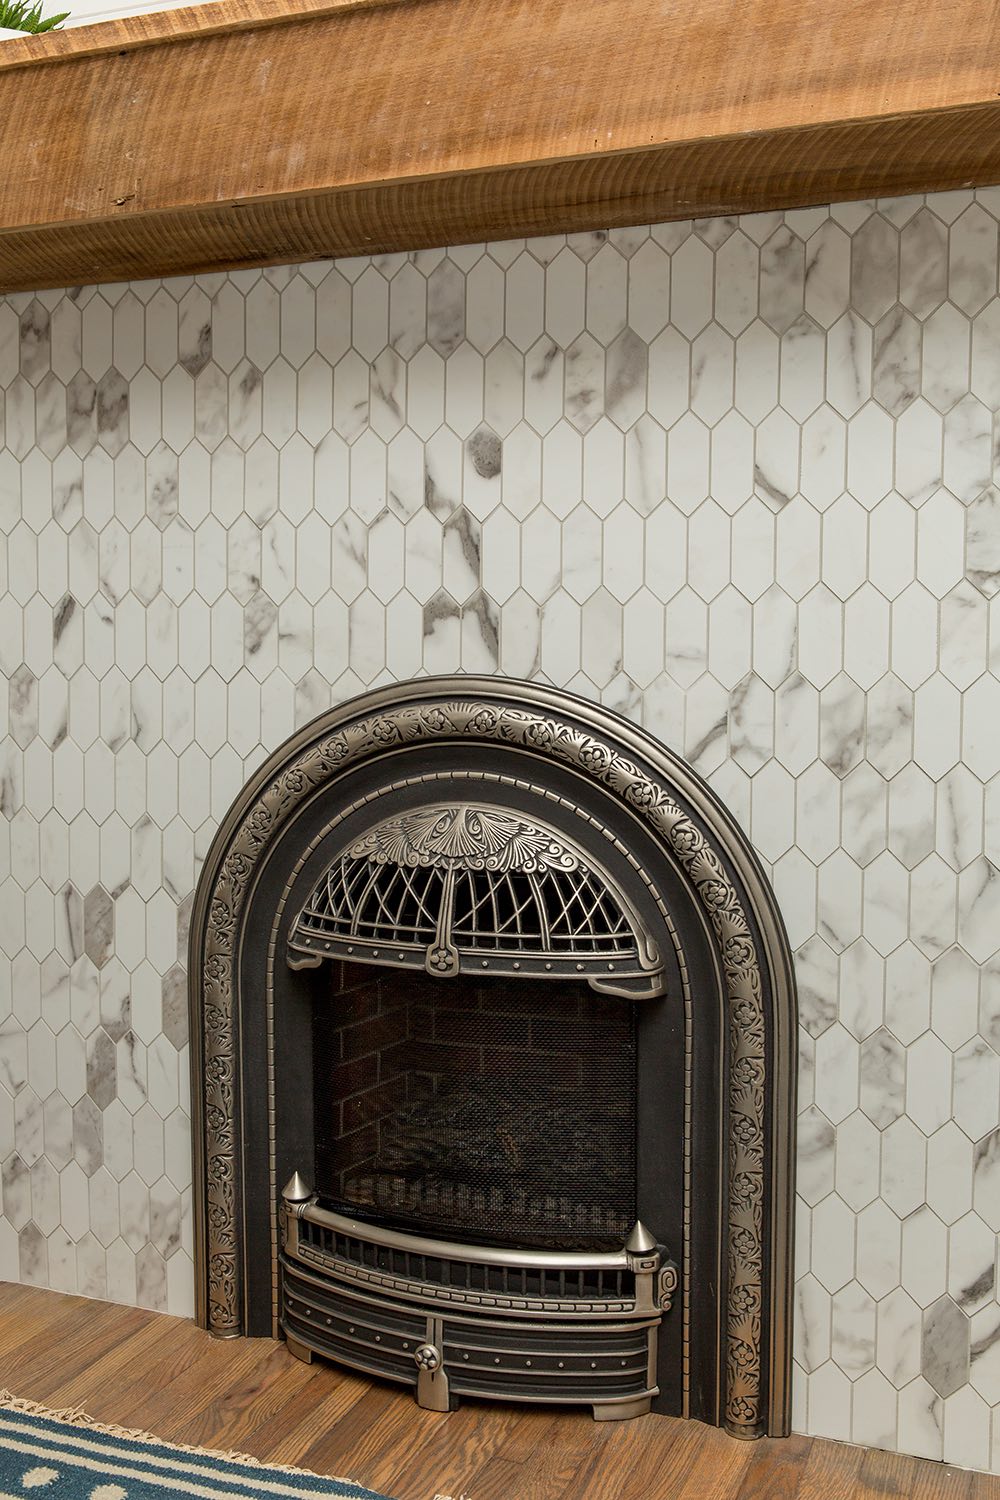 Honeycomb tile on fireplace